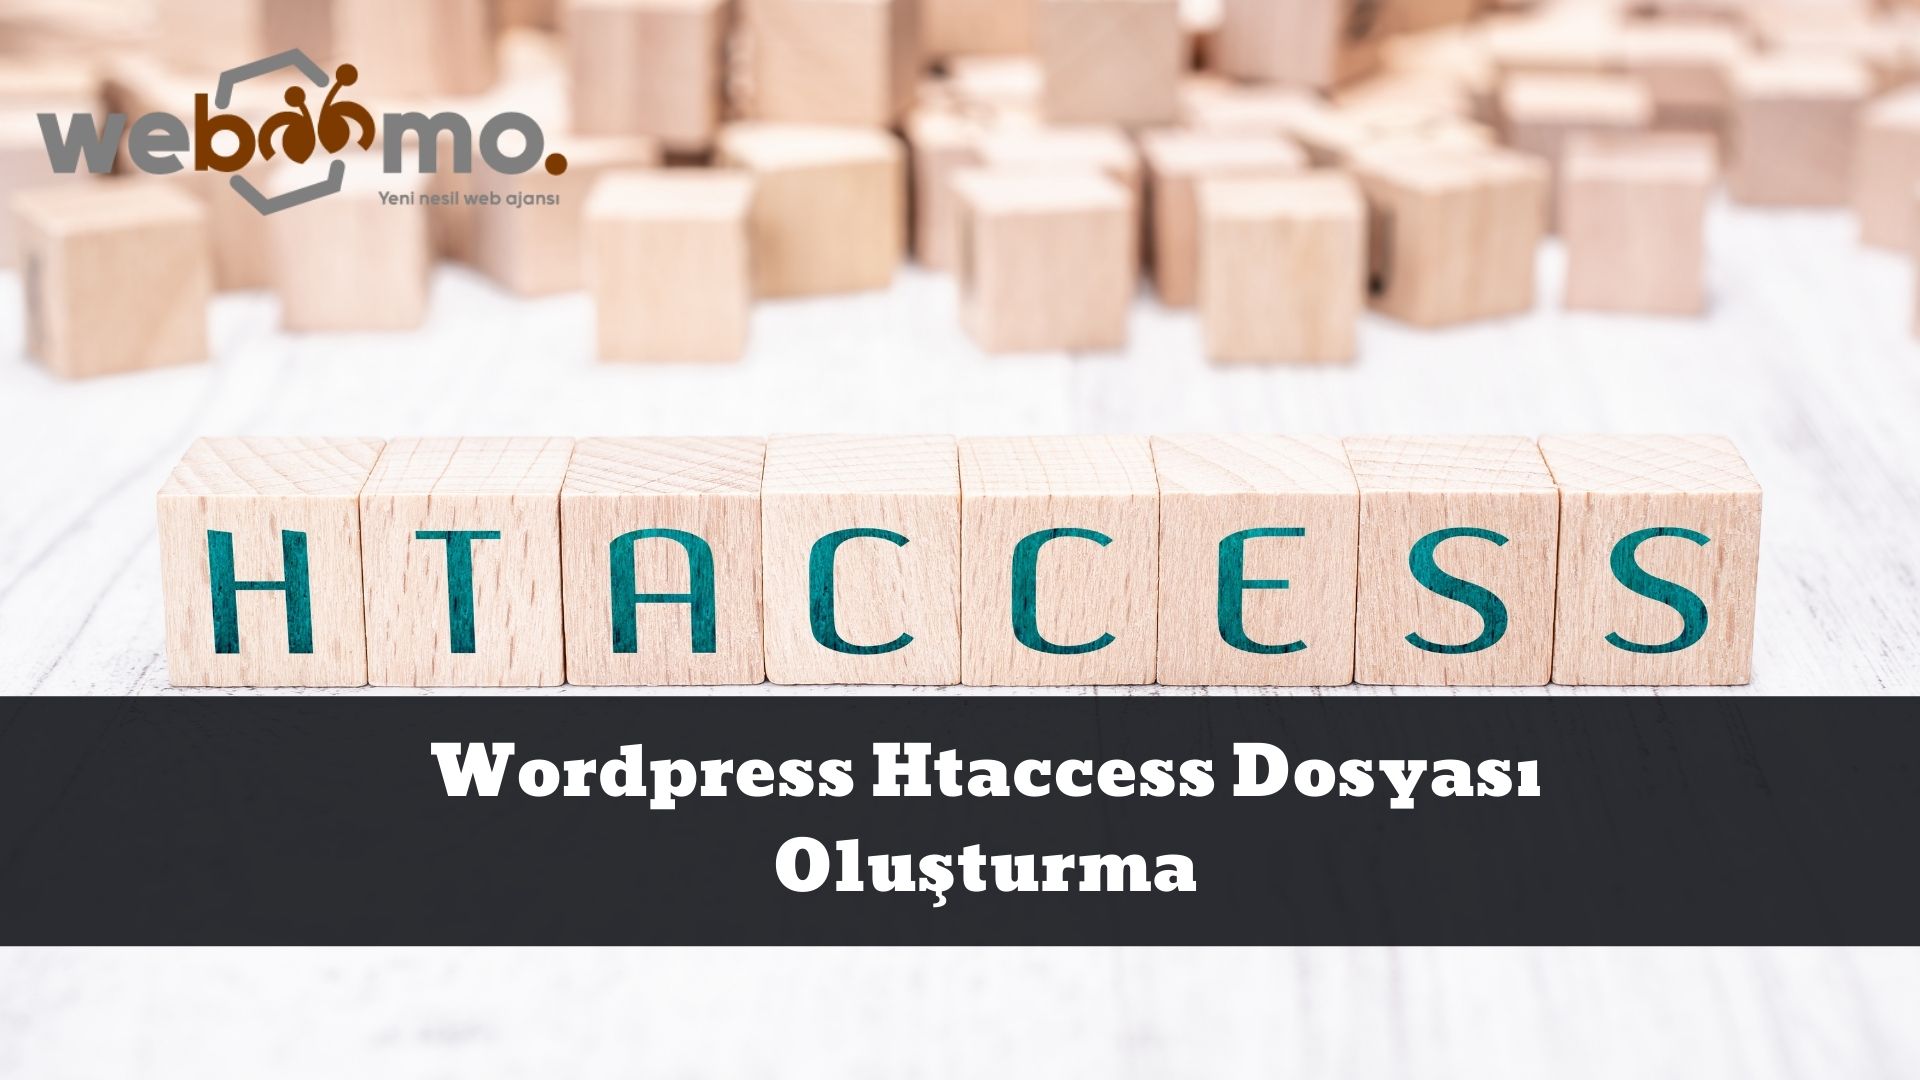 Wordpress Htaccess Dosyasi Olusturma